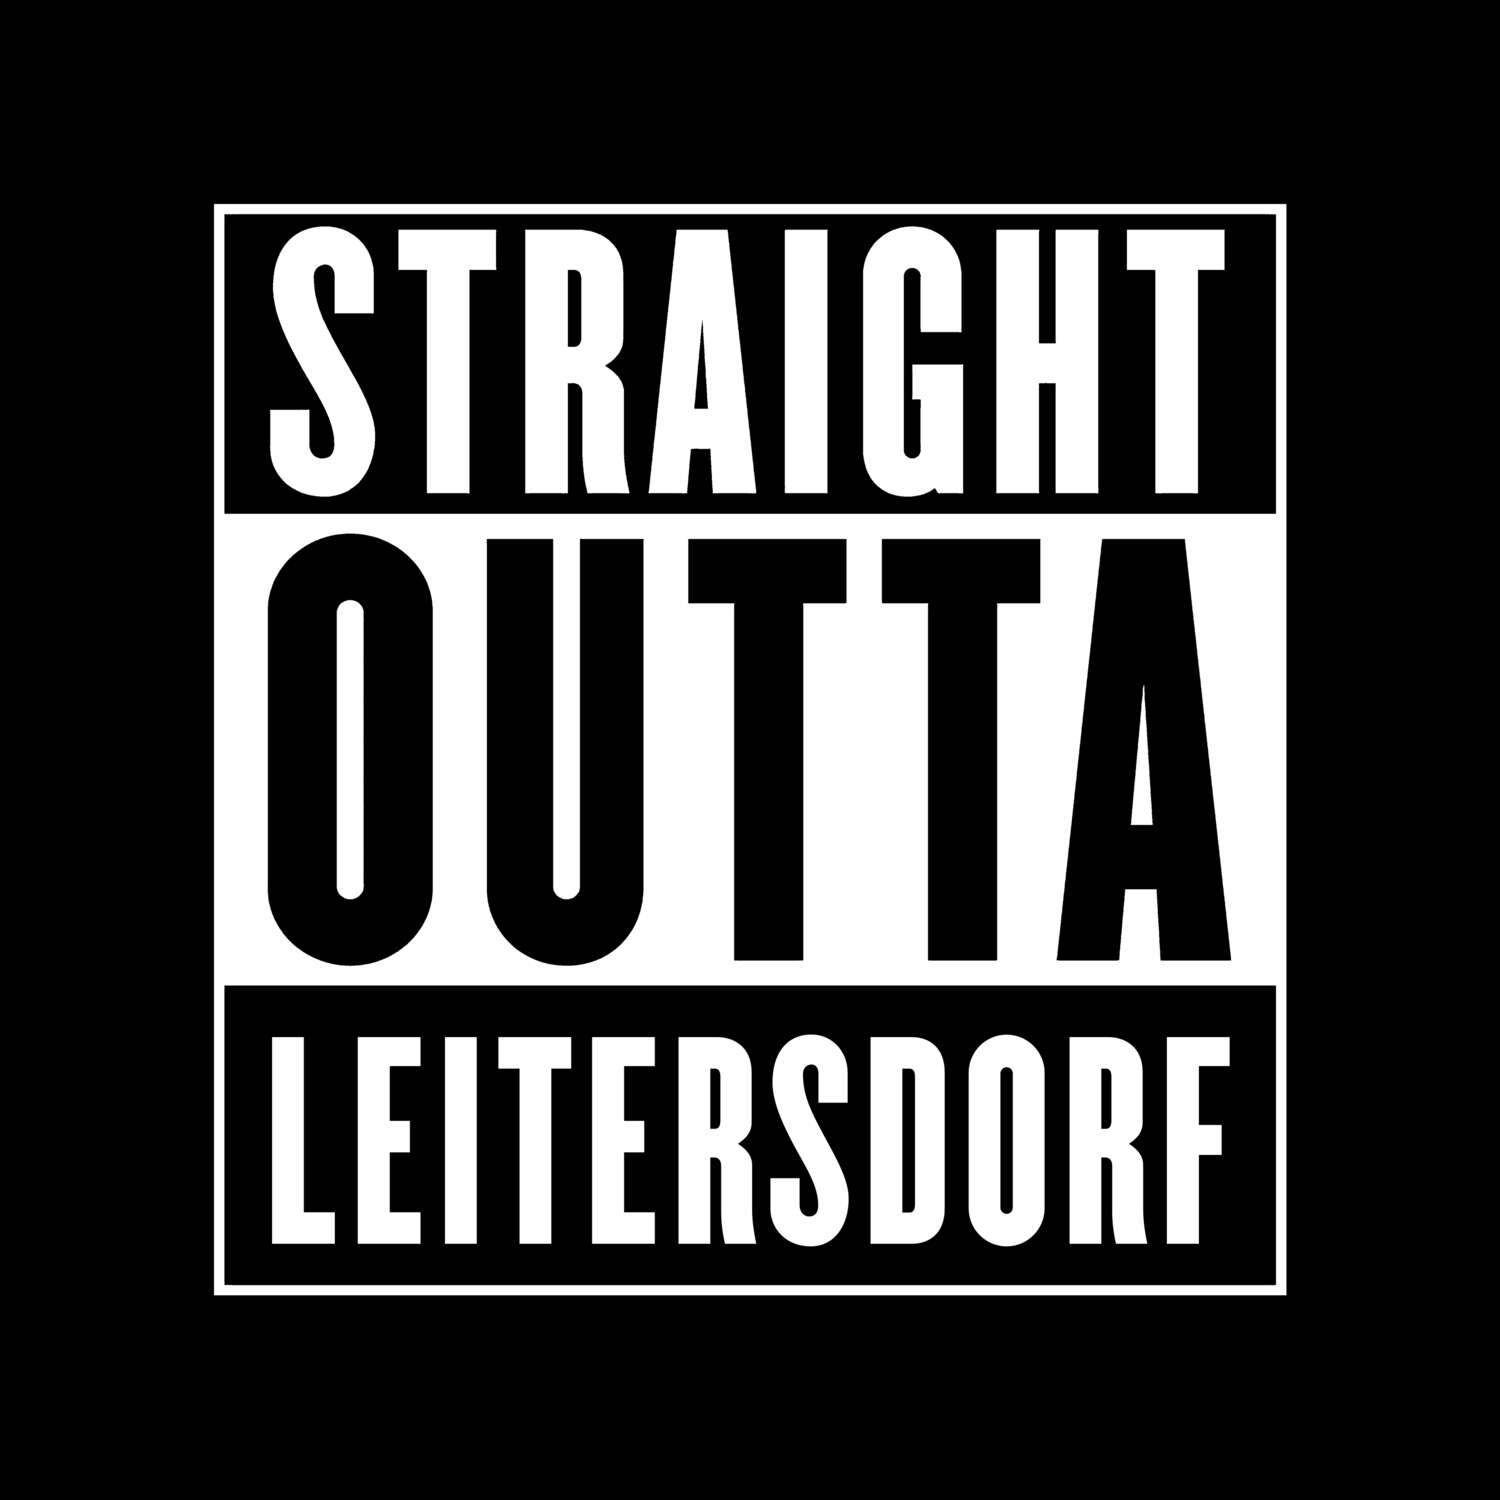 Leitersdorf T-Shirt »Straight Outta«